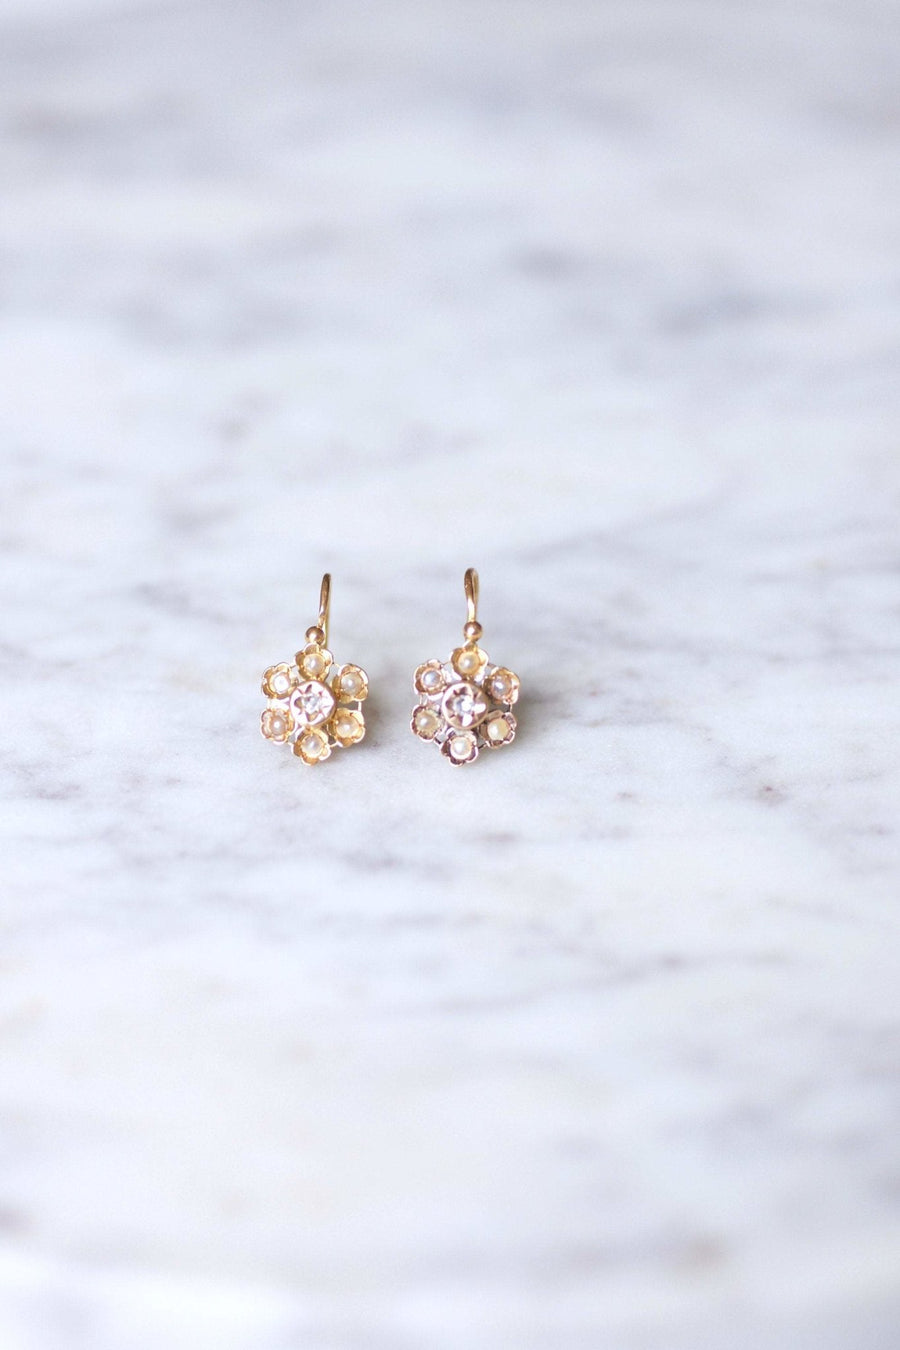 Antique flower, pearl and diamond earrings - Penelope Gallery